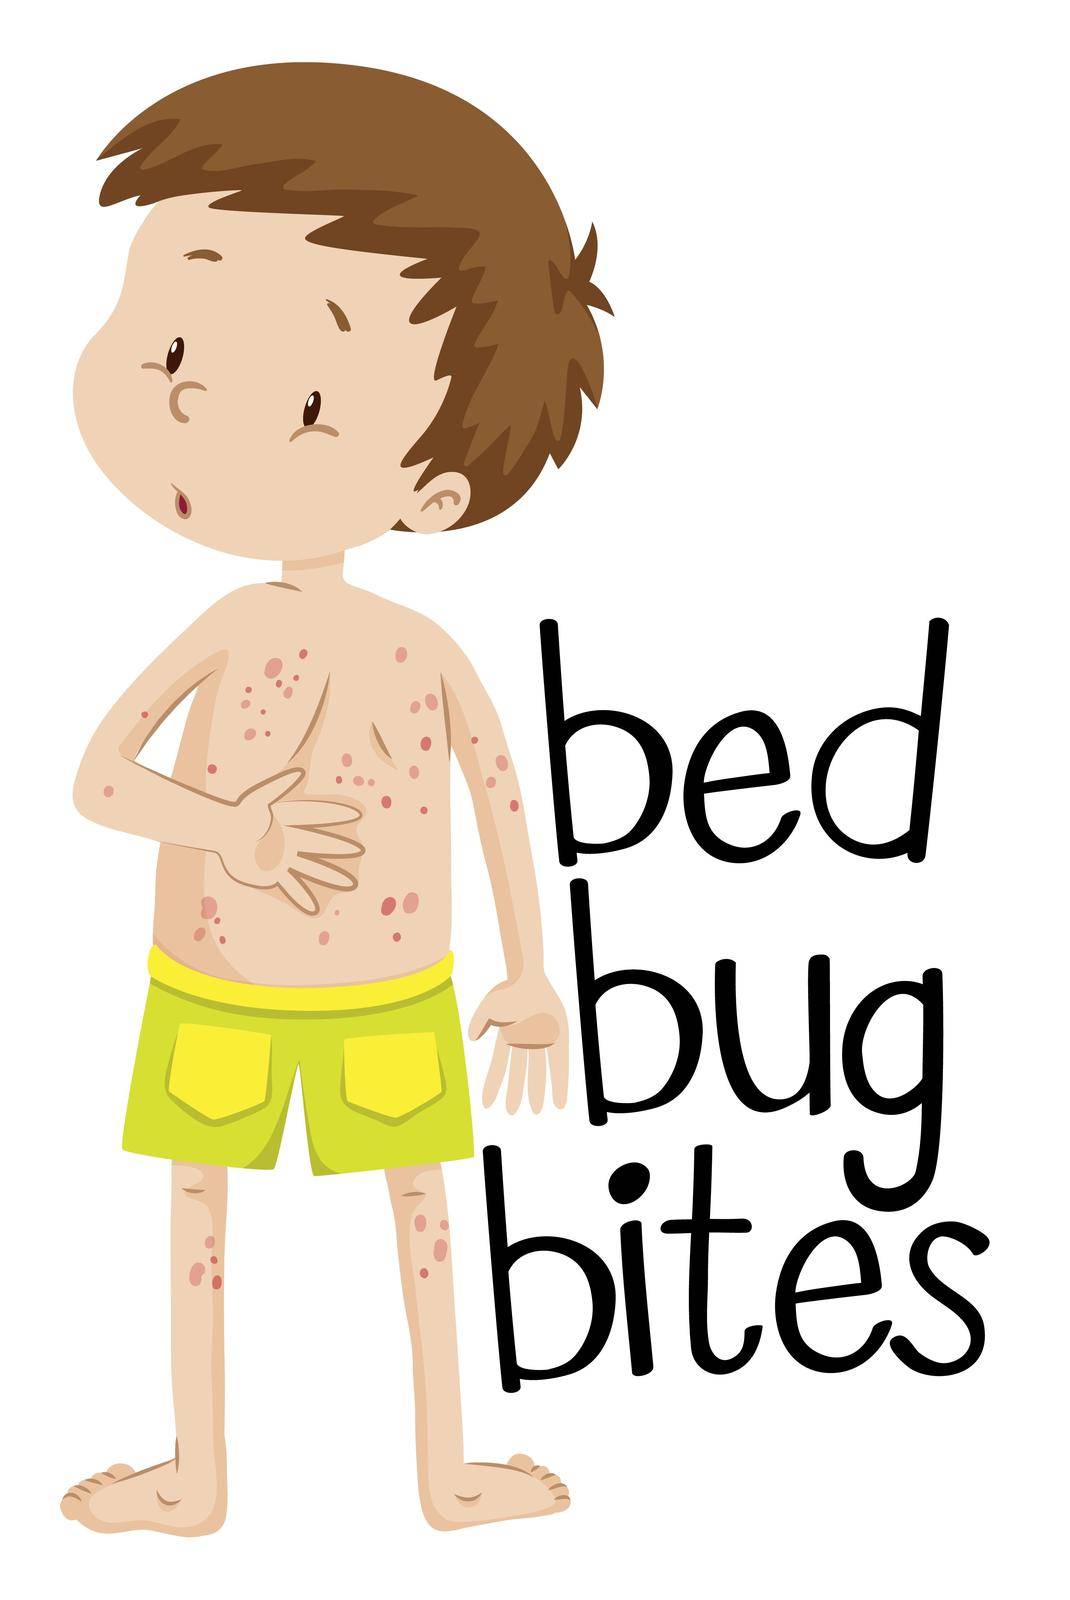 Boy having bed bug bites by iimages